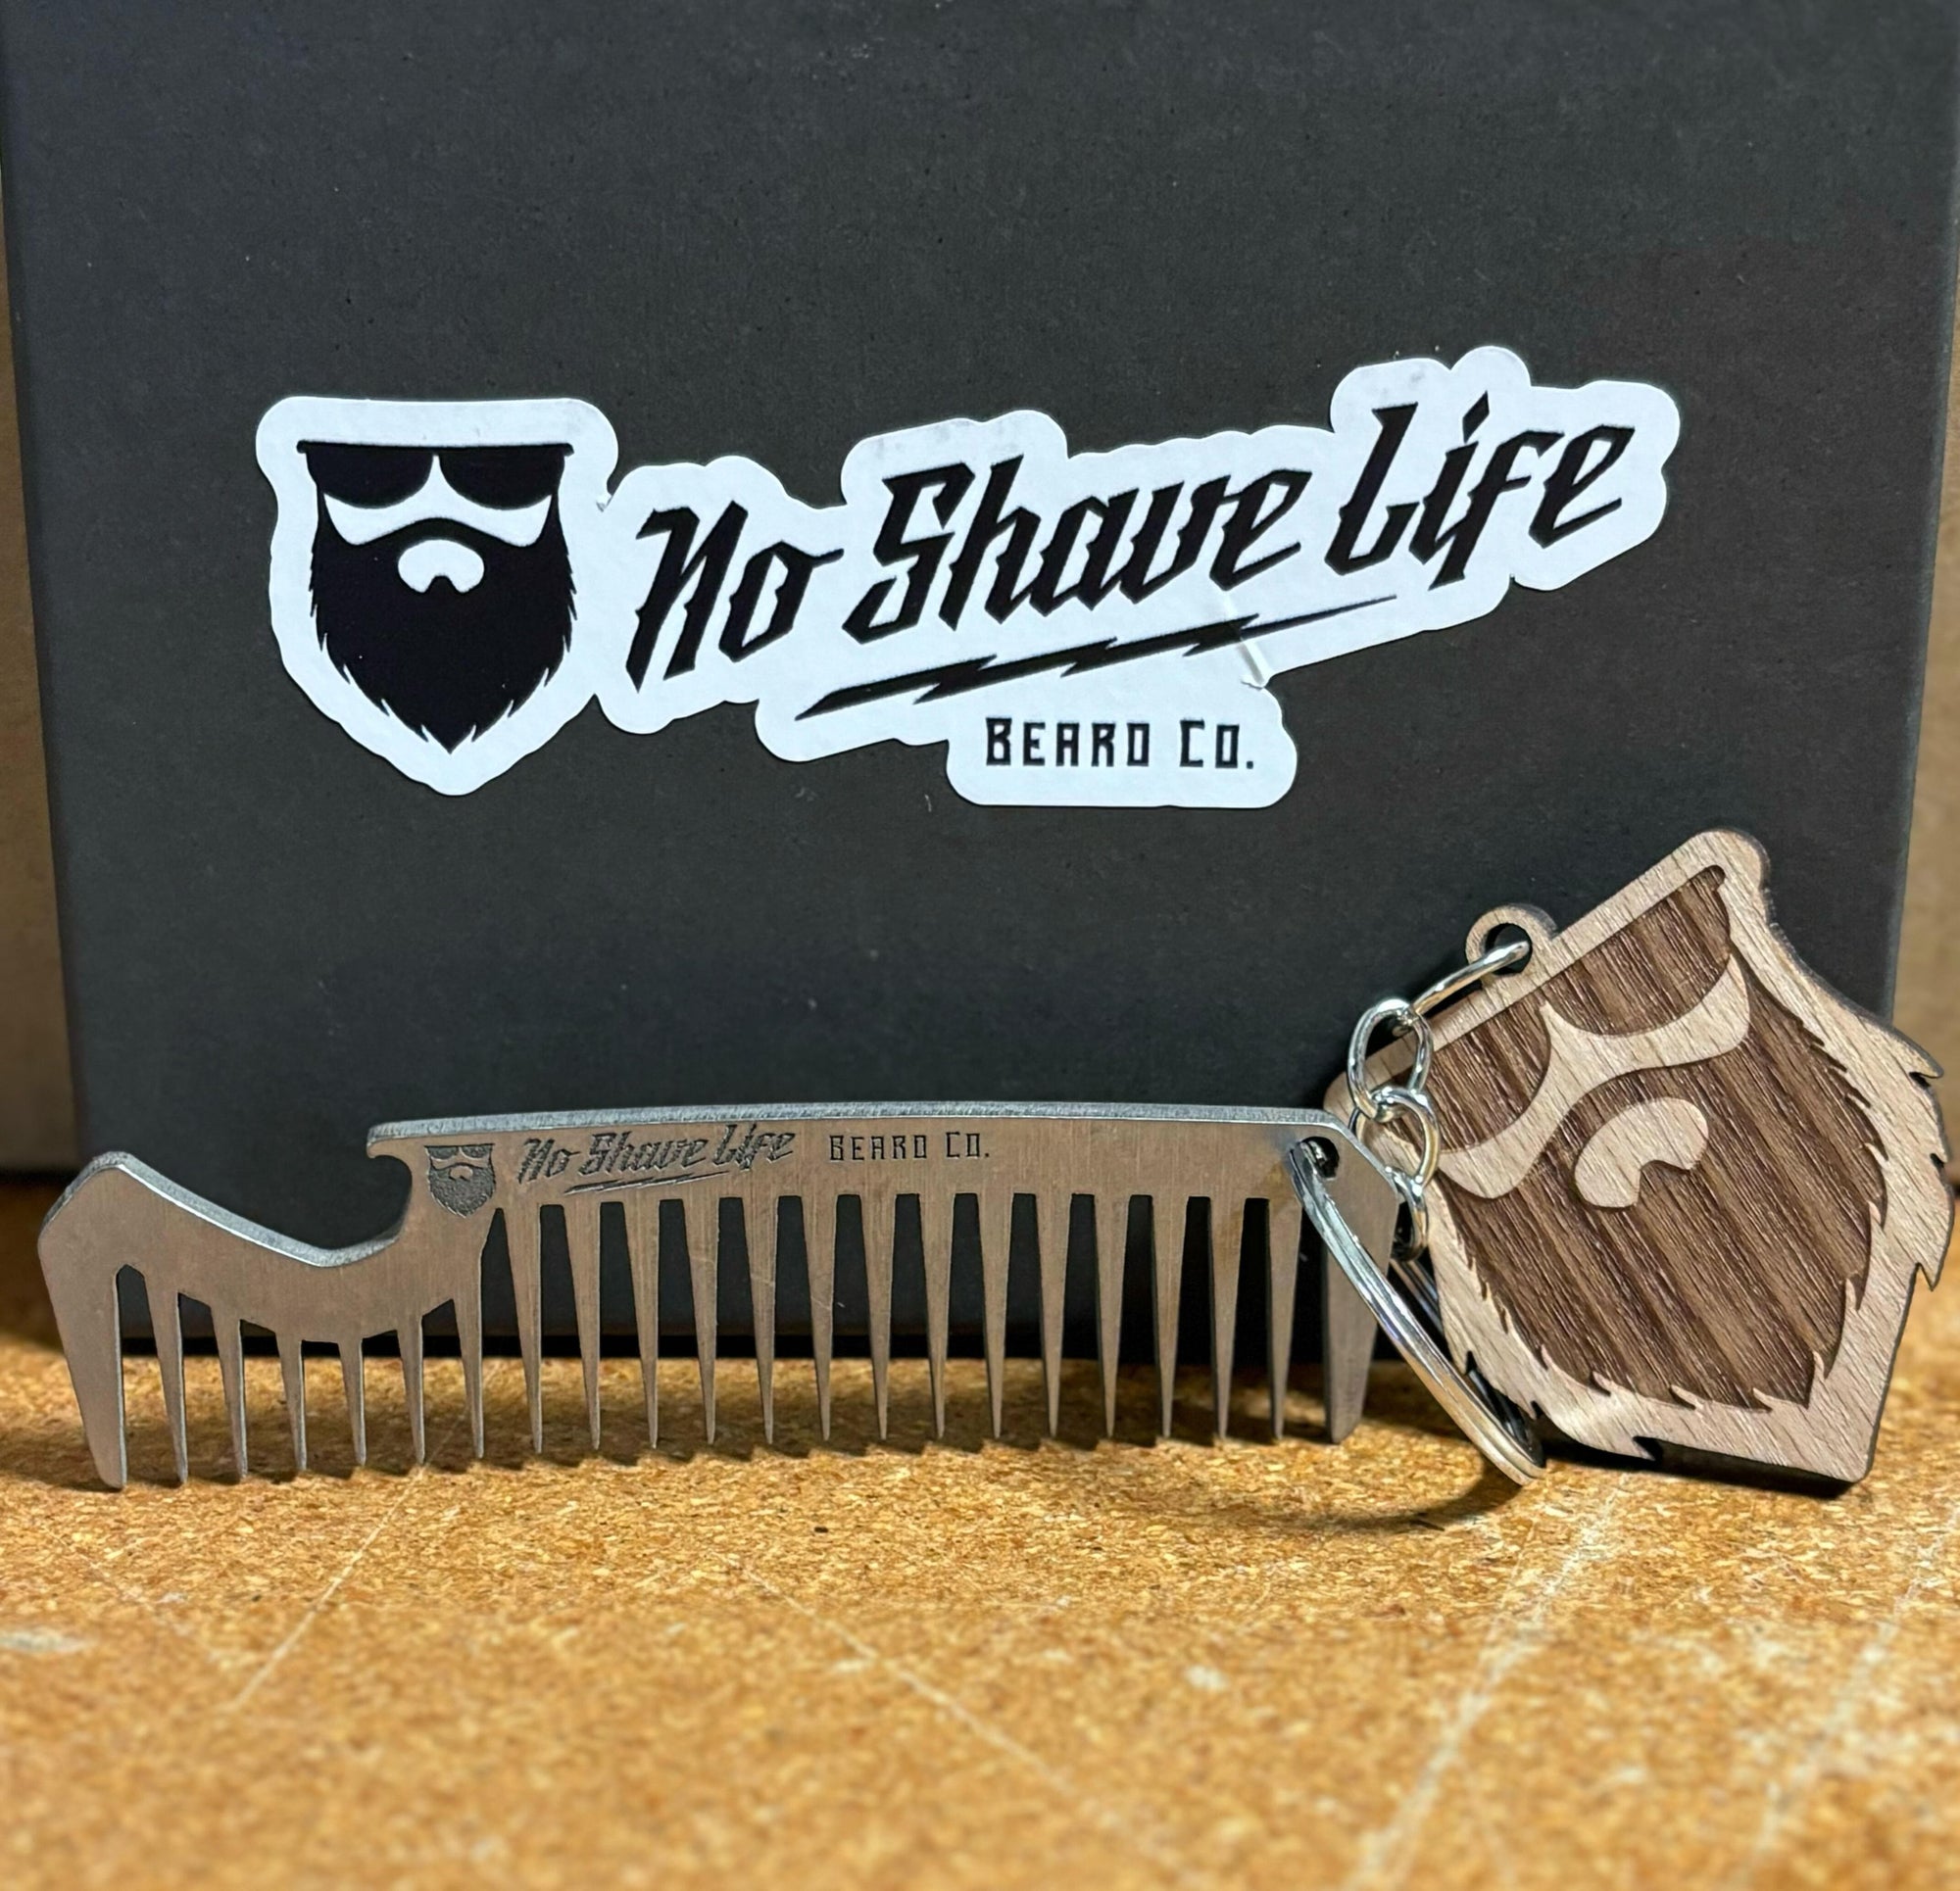 Titanium Beard Comb - Comb Your Beard & Drink A Beer No Shave Life